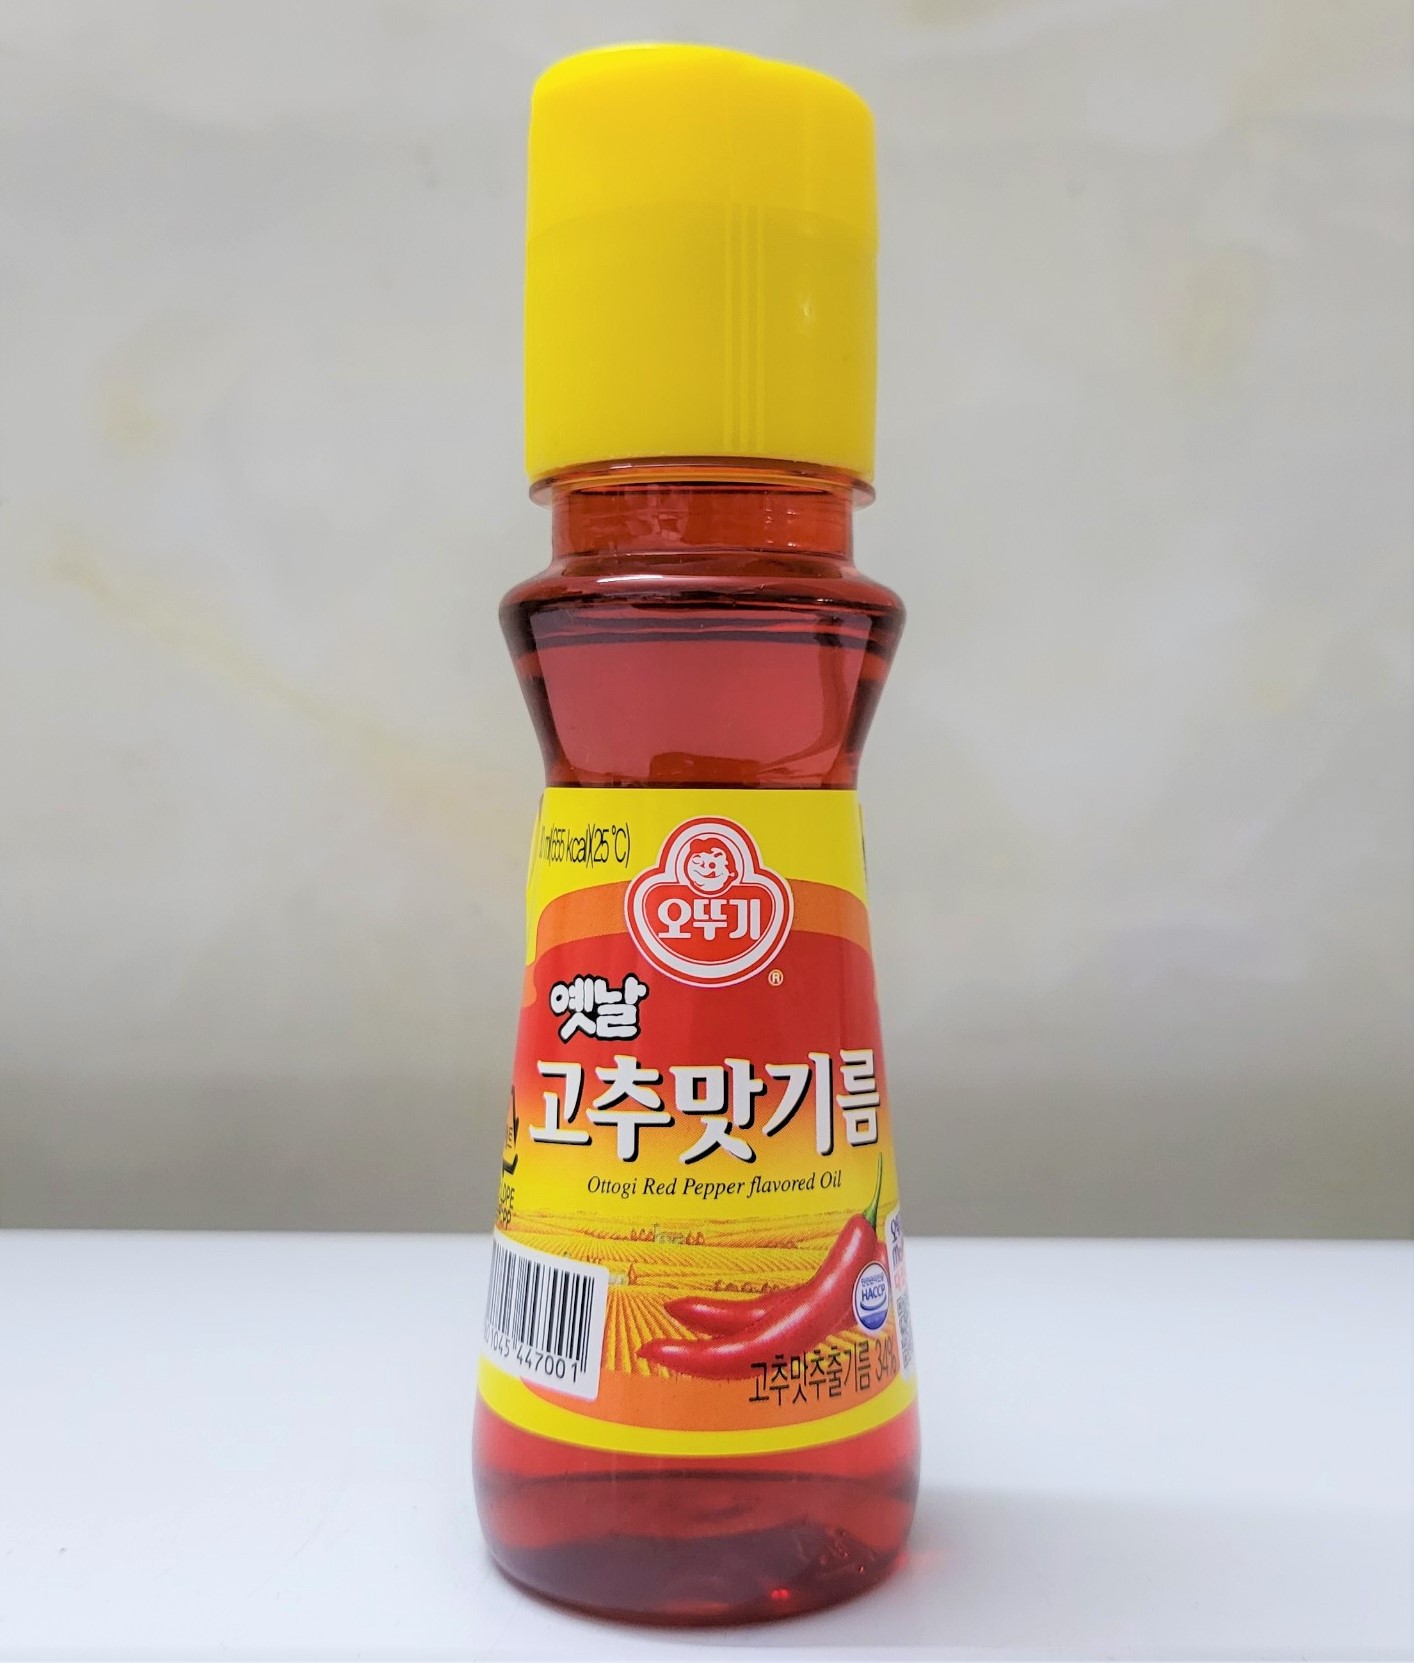 Chai 80ml DẦU ỚT Korea OTTOGI Red Pepper Flavored Oil